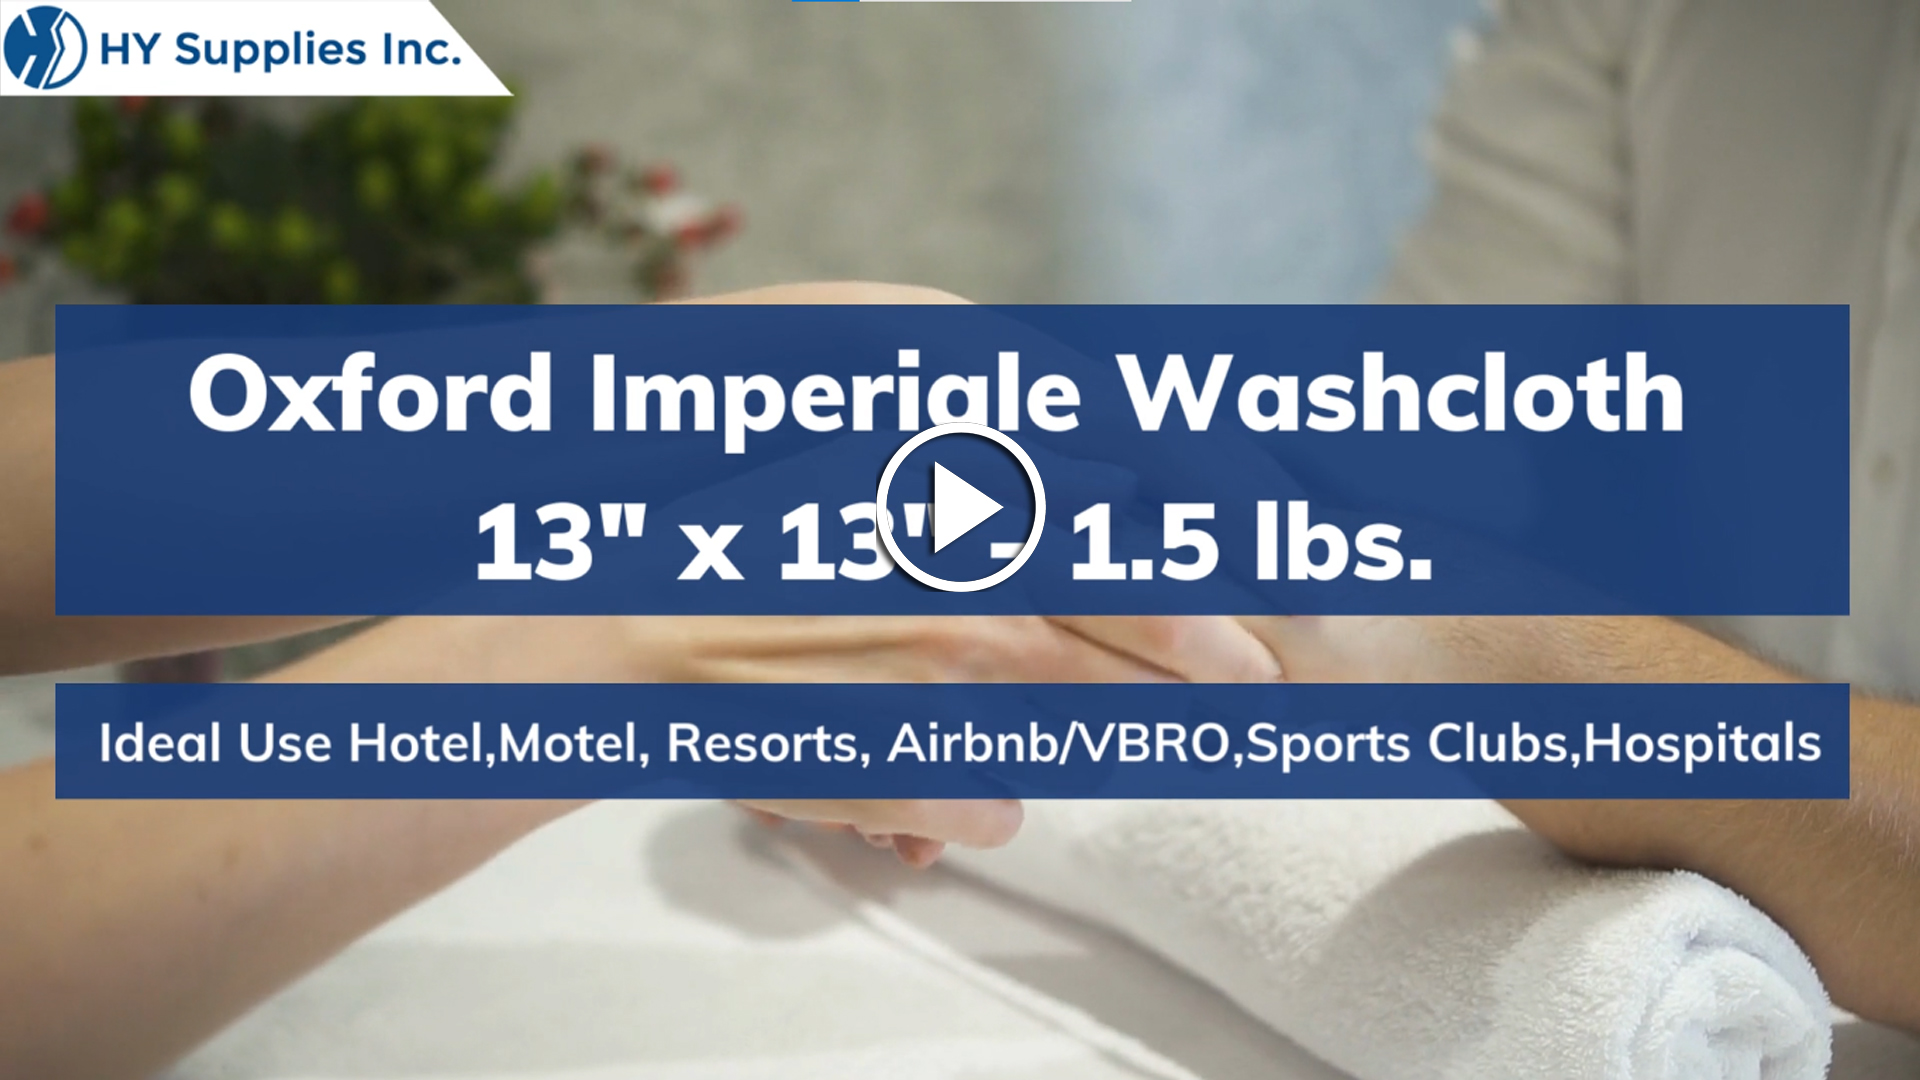 Oxford Imperiale Washcloth - 13" x 13" - 1.5 lbs.